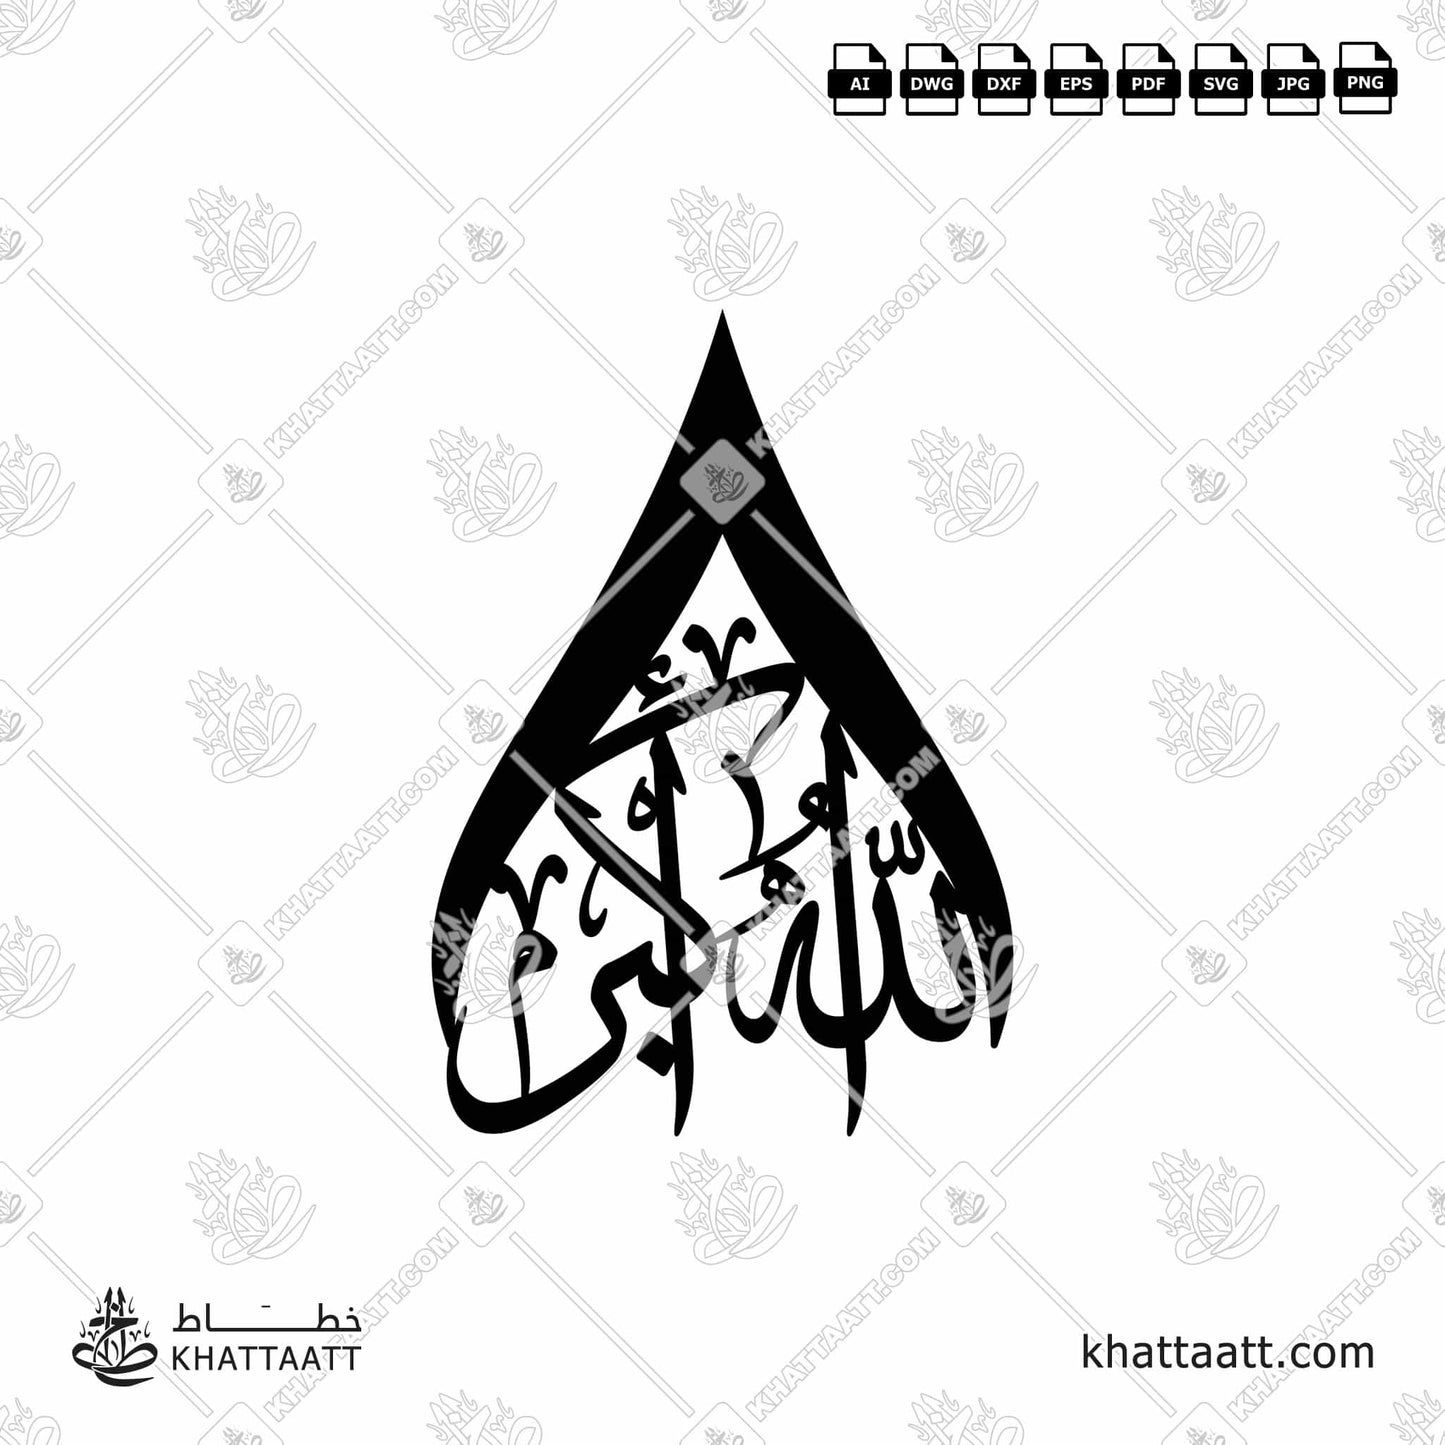 Download Arabic calligraphy تحميل مخطوطة خط عربي of ALLAHU AKBAR - الله أكبر (TC021) Thuluth - خط الثلث in vector فيكتور and png